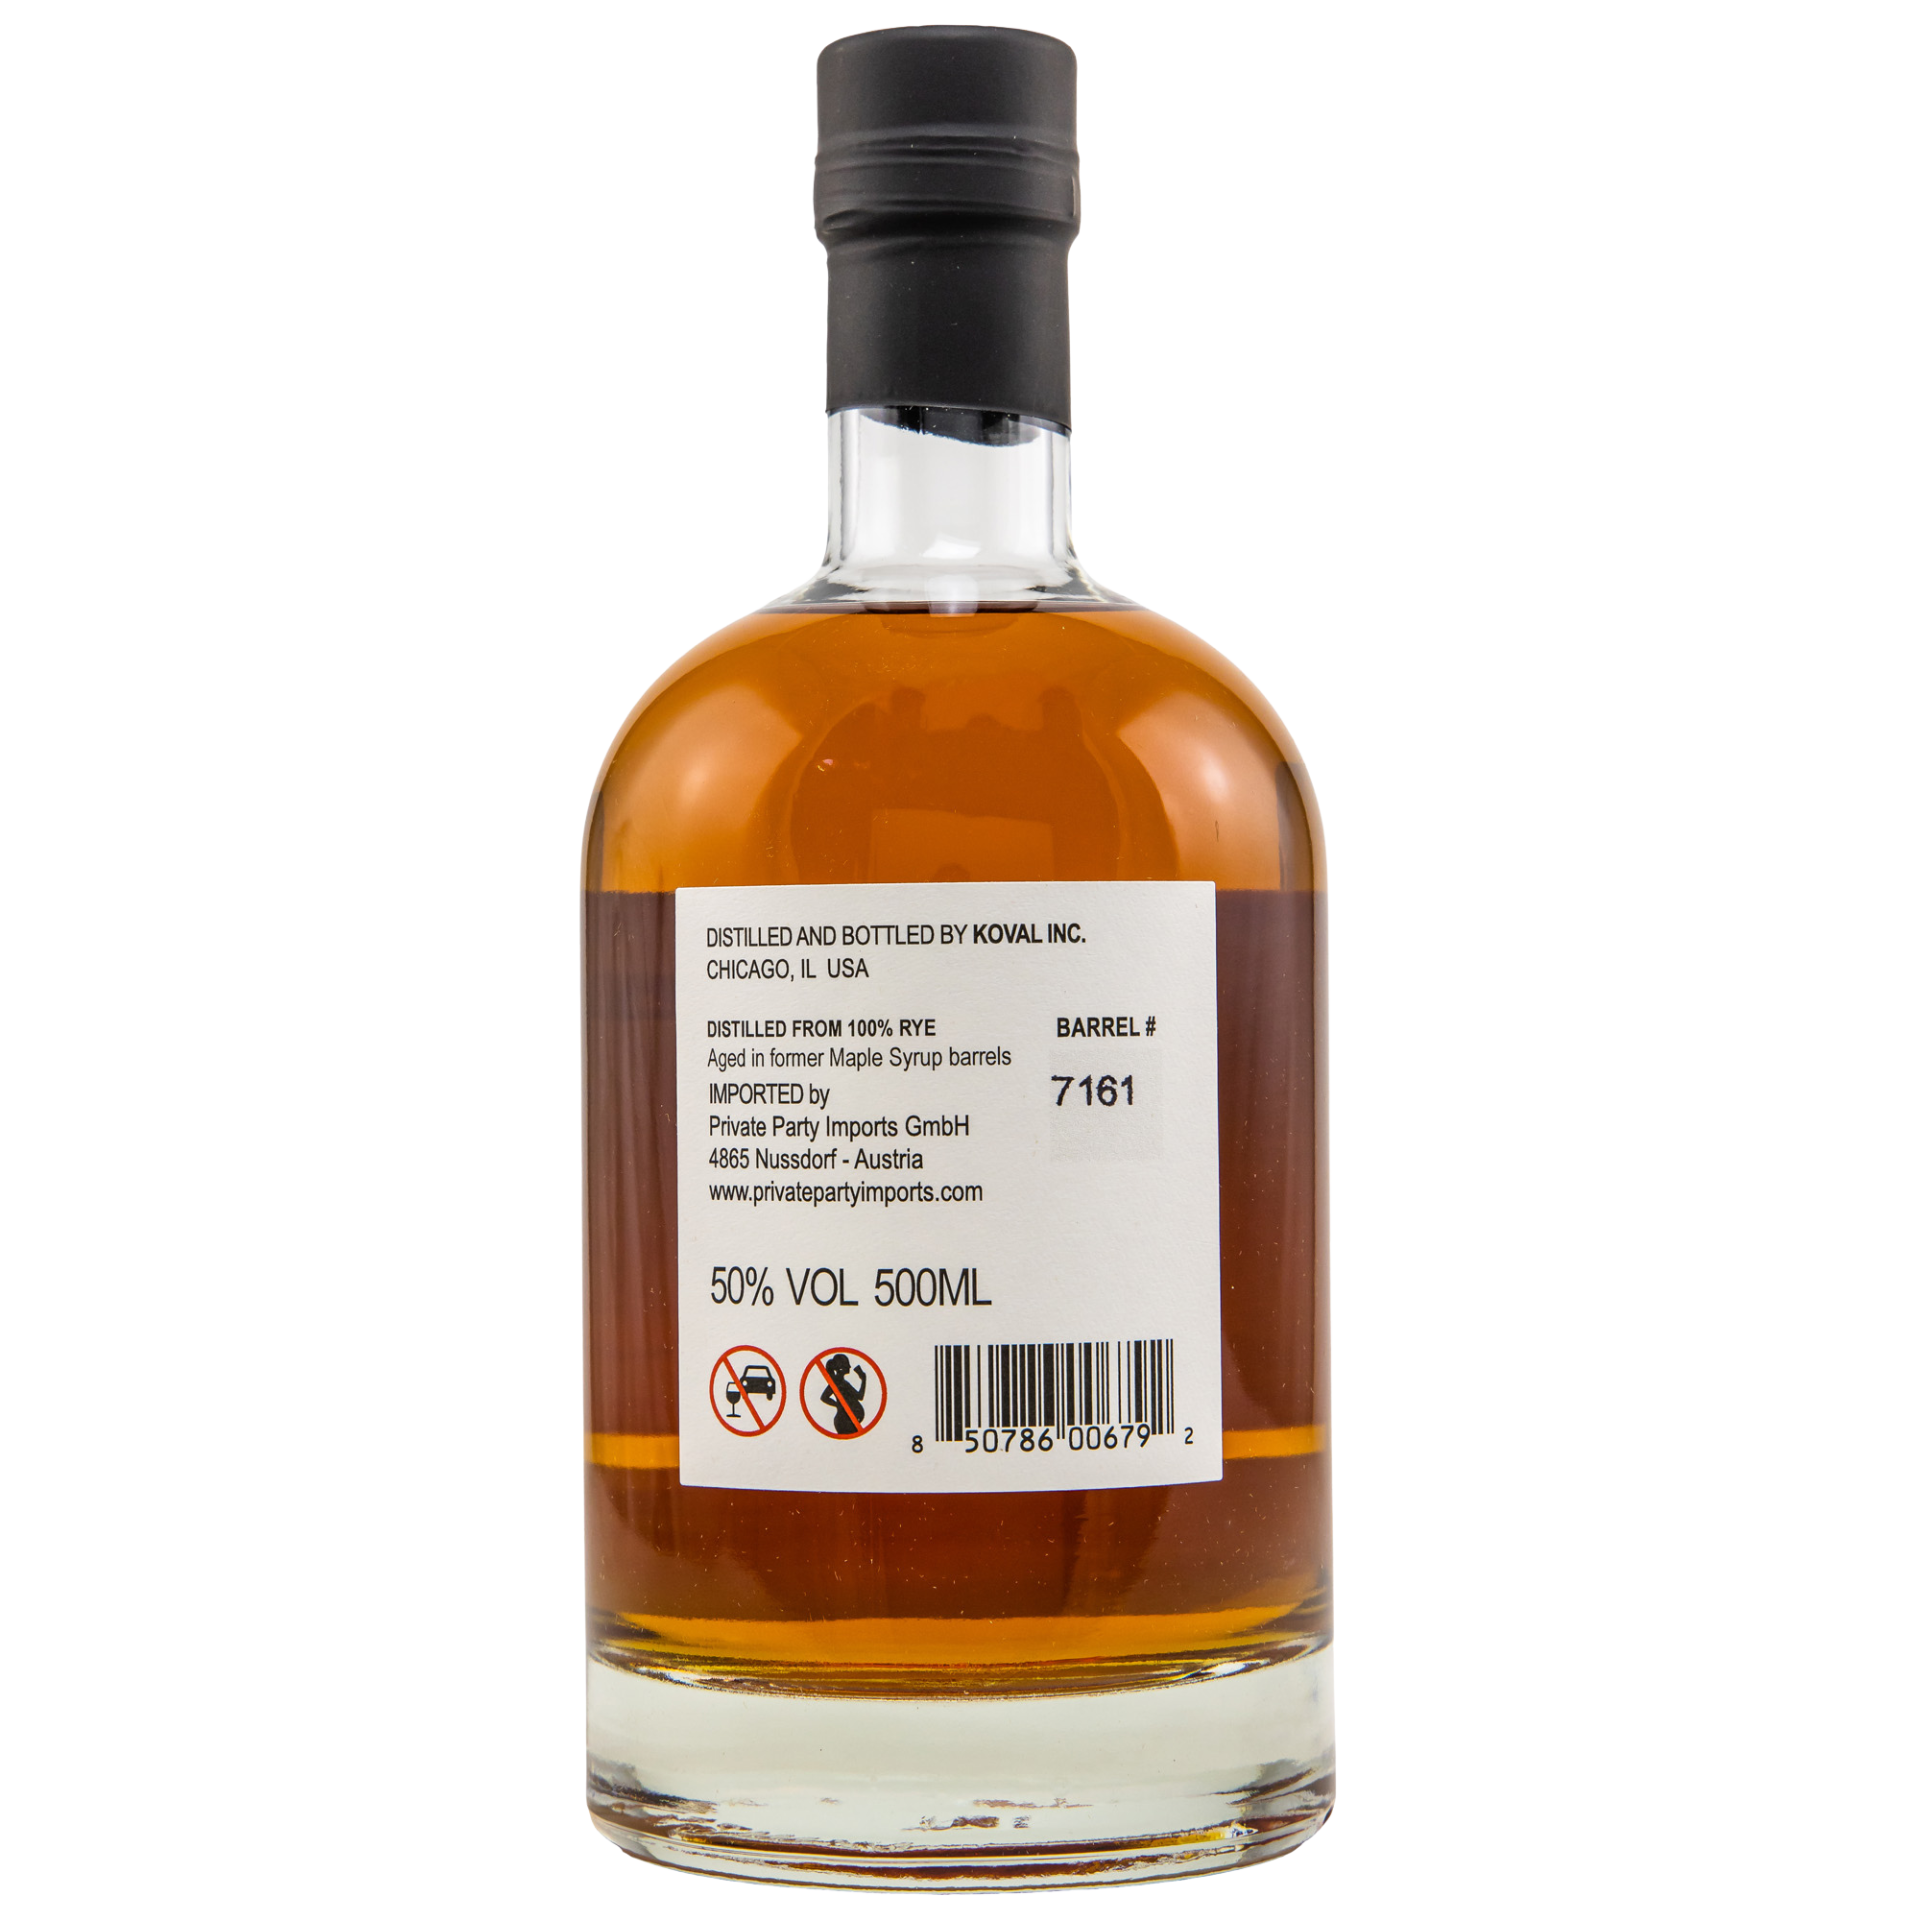 Koval Rye Maple Syrup Cask Finish Whiskey #7161 50% 0,5l